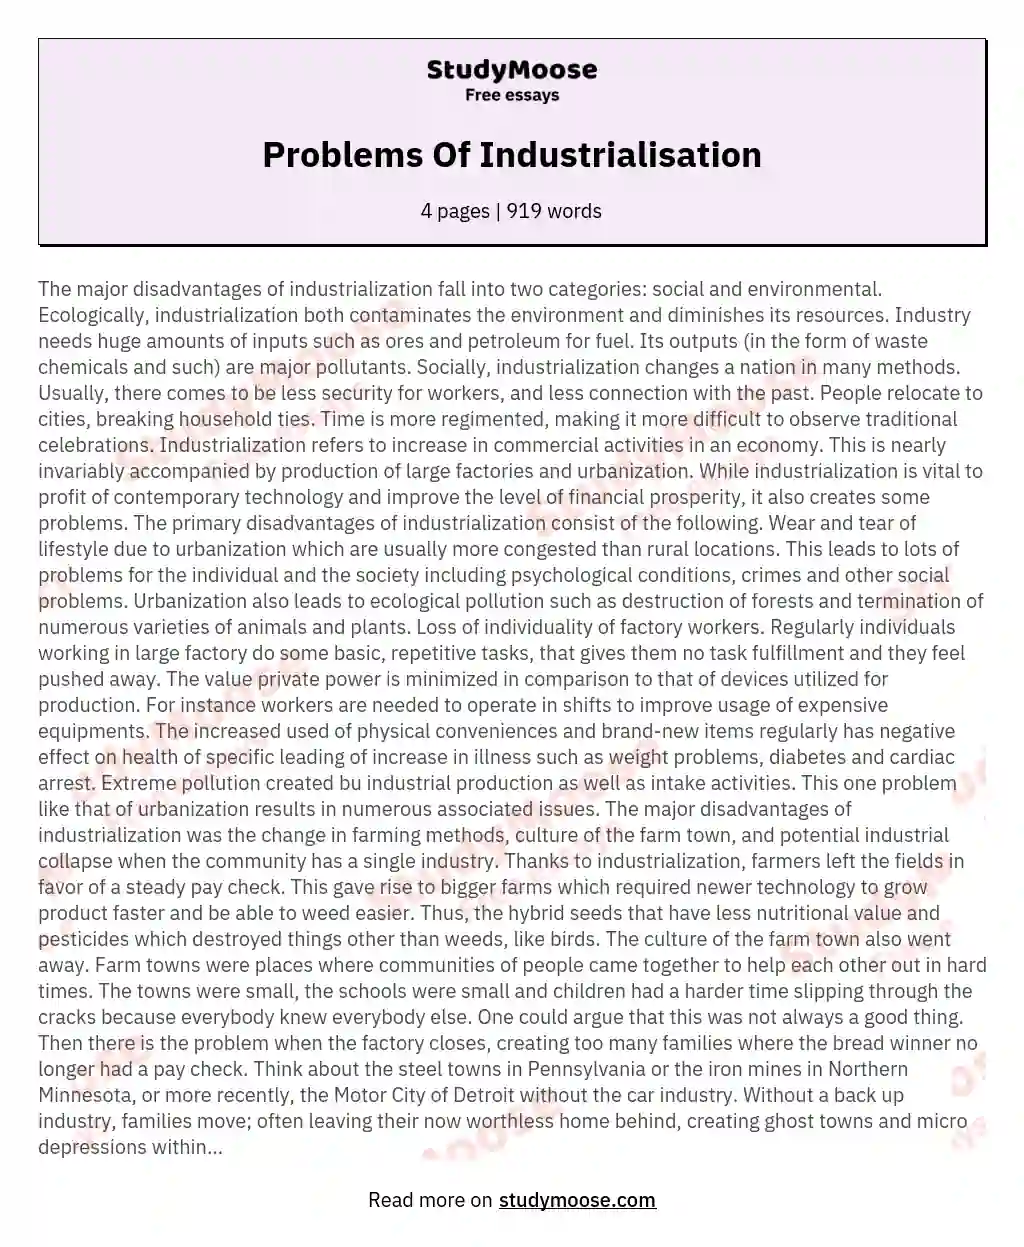 Problems Of Industrialisation essay